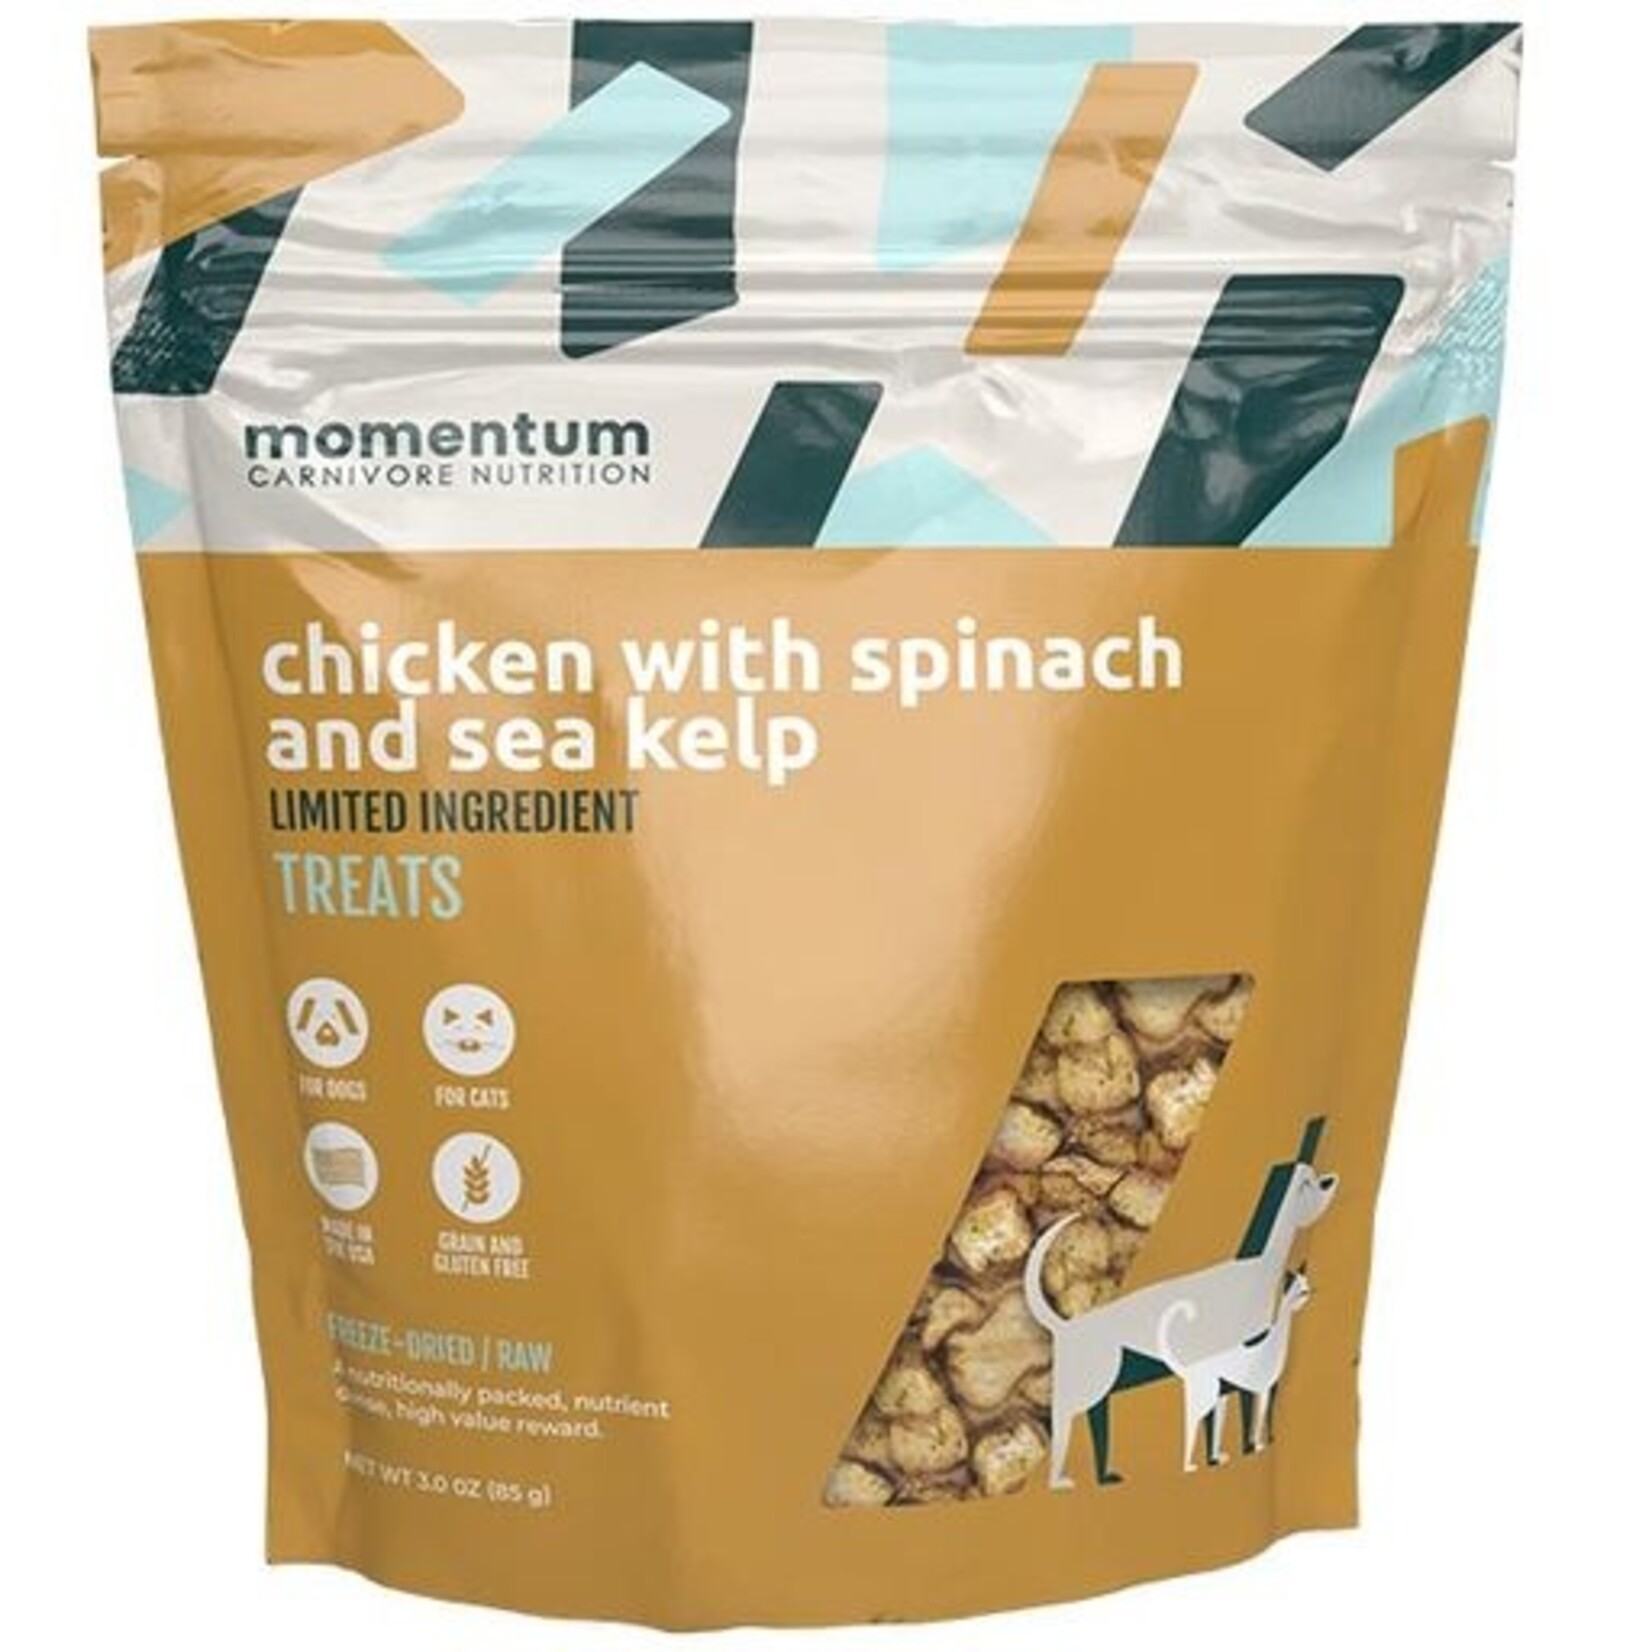 Momentum Carnivore Nutrition Momentum Carnivore Nutrition Chicken with Sea Kelp Treats